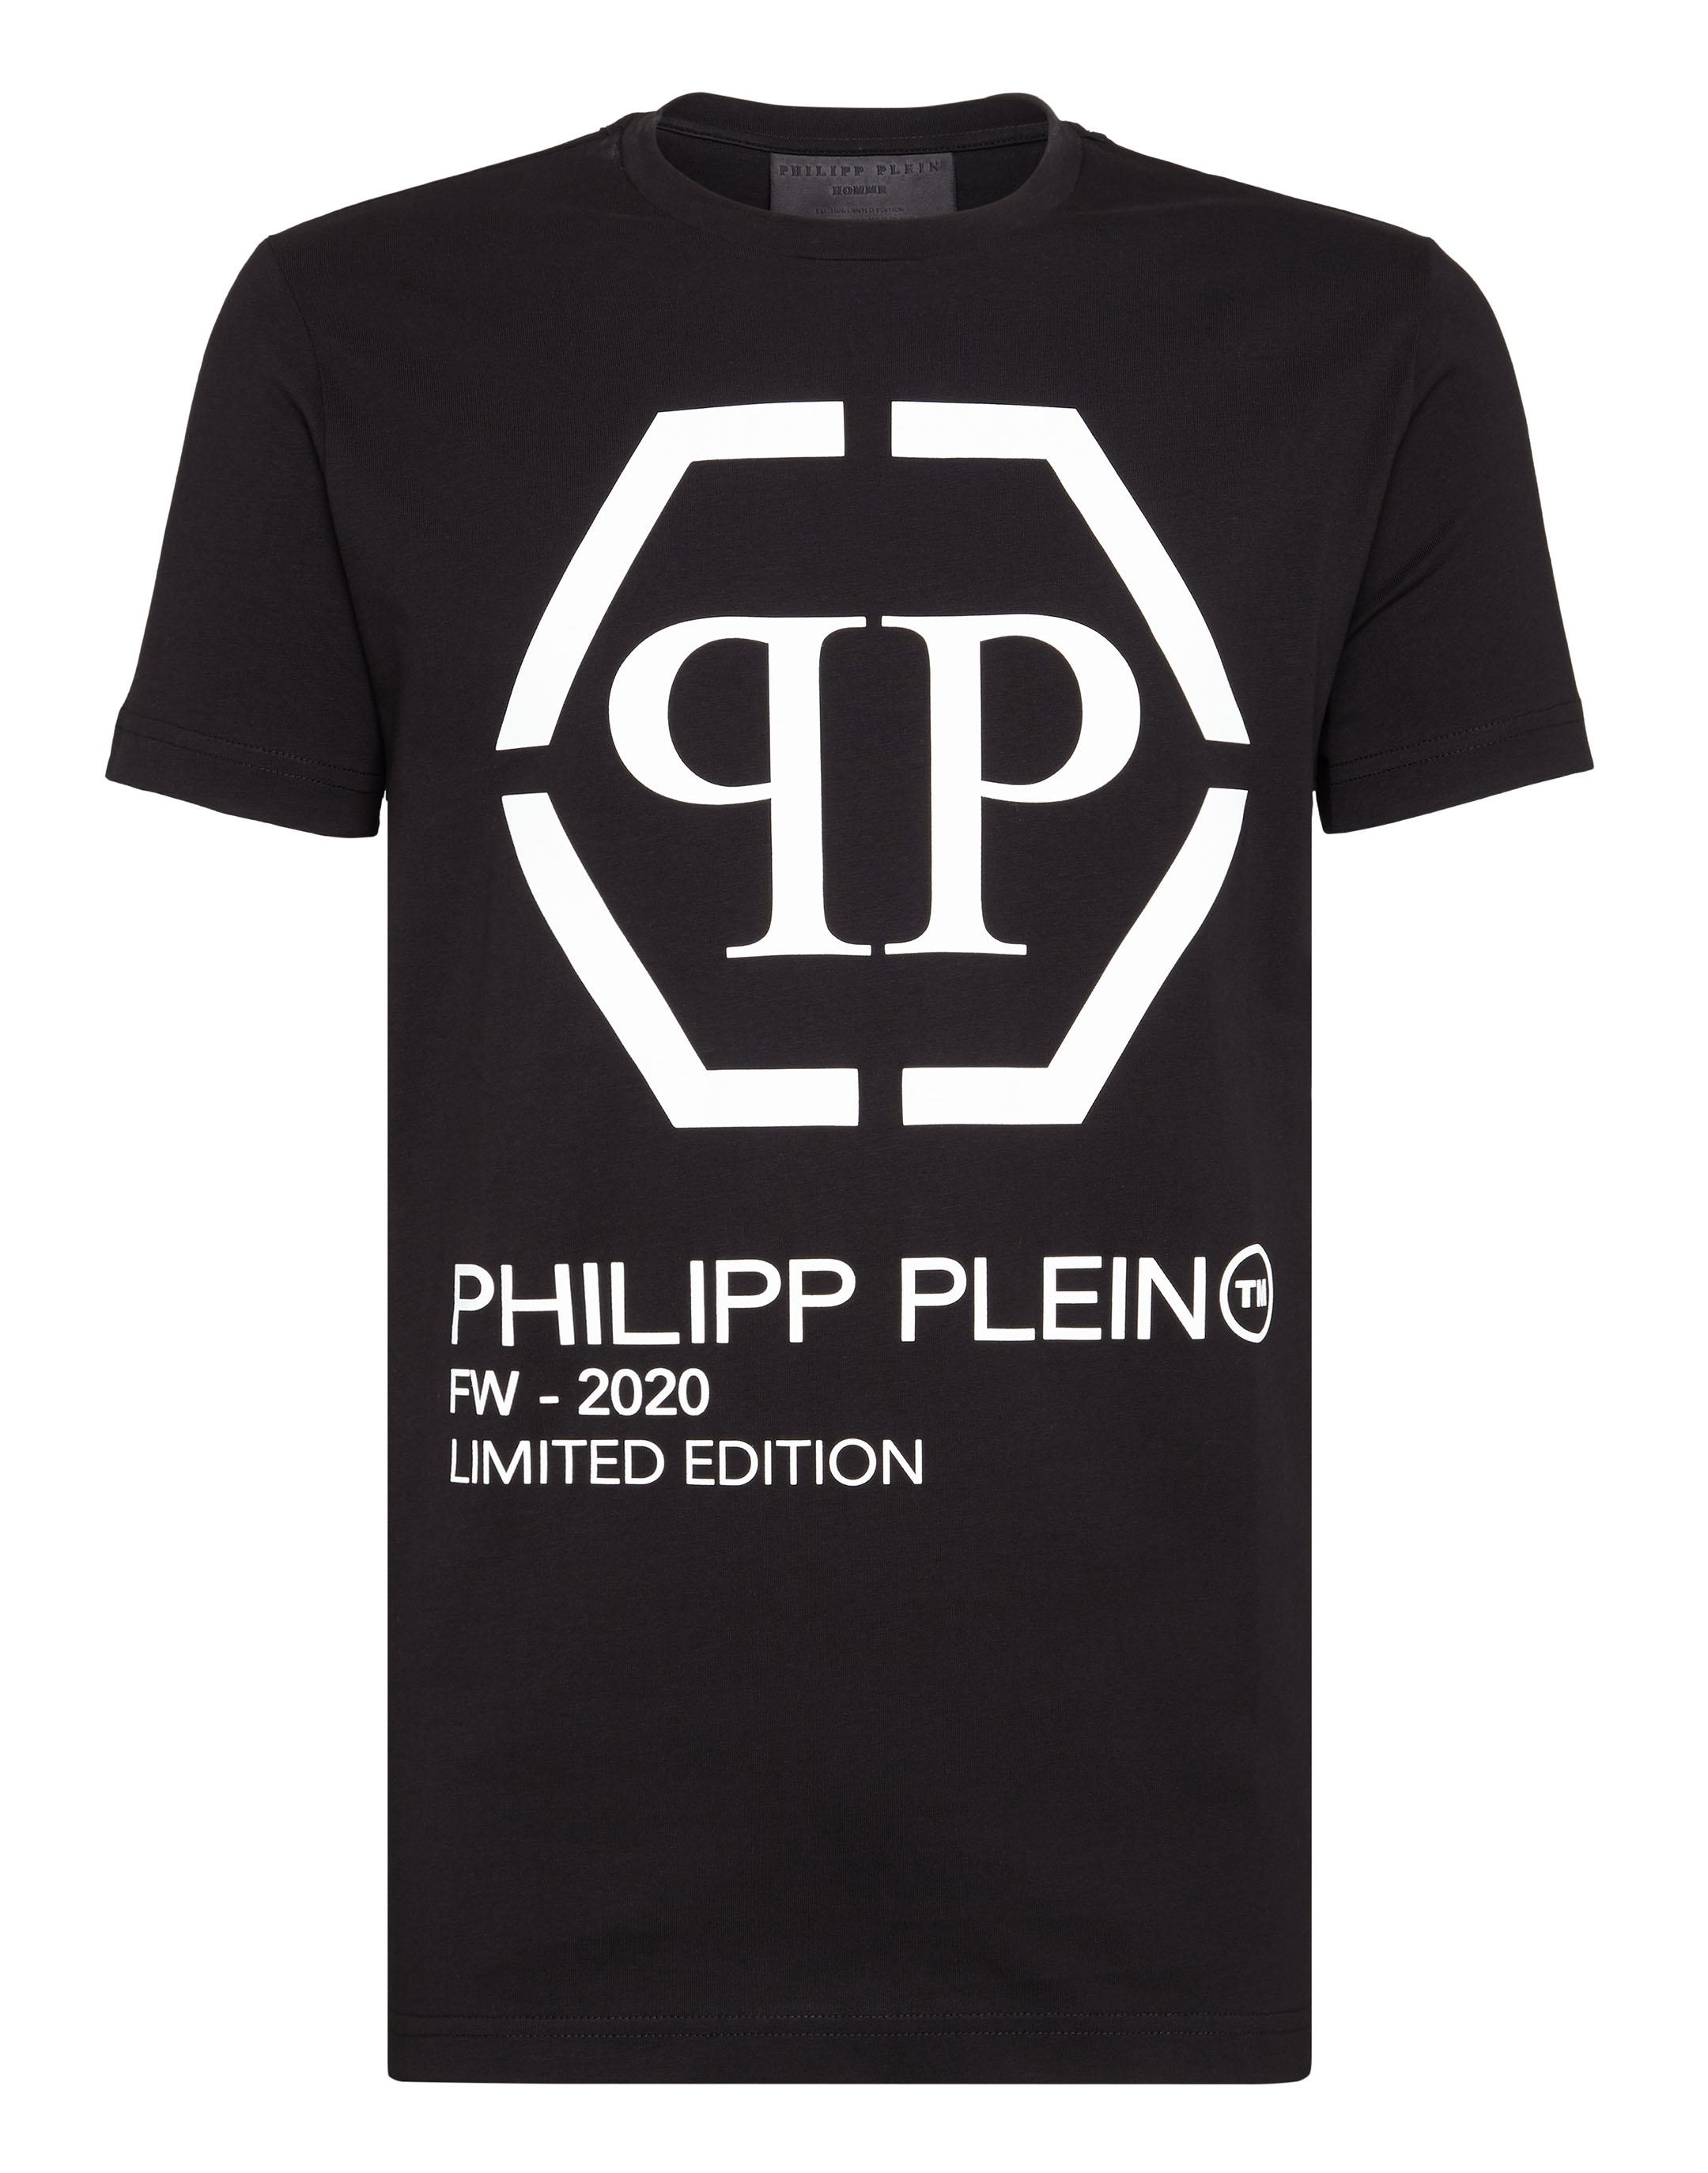 philipp plein t shirt limited edition